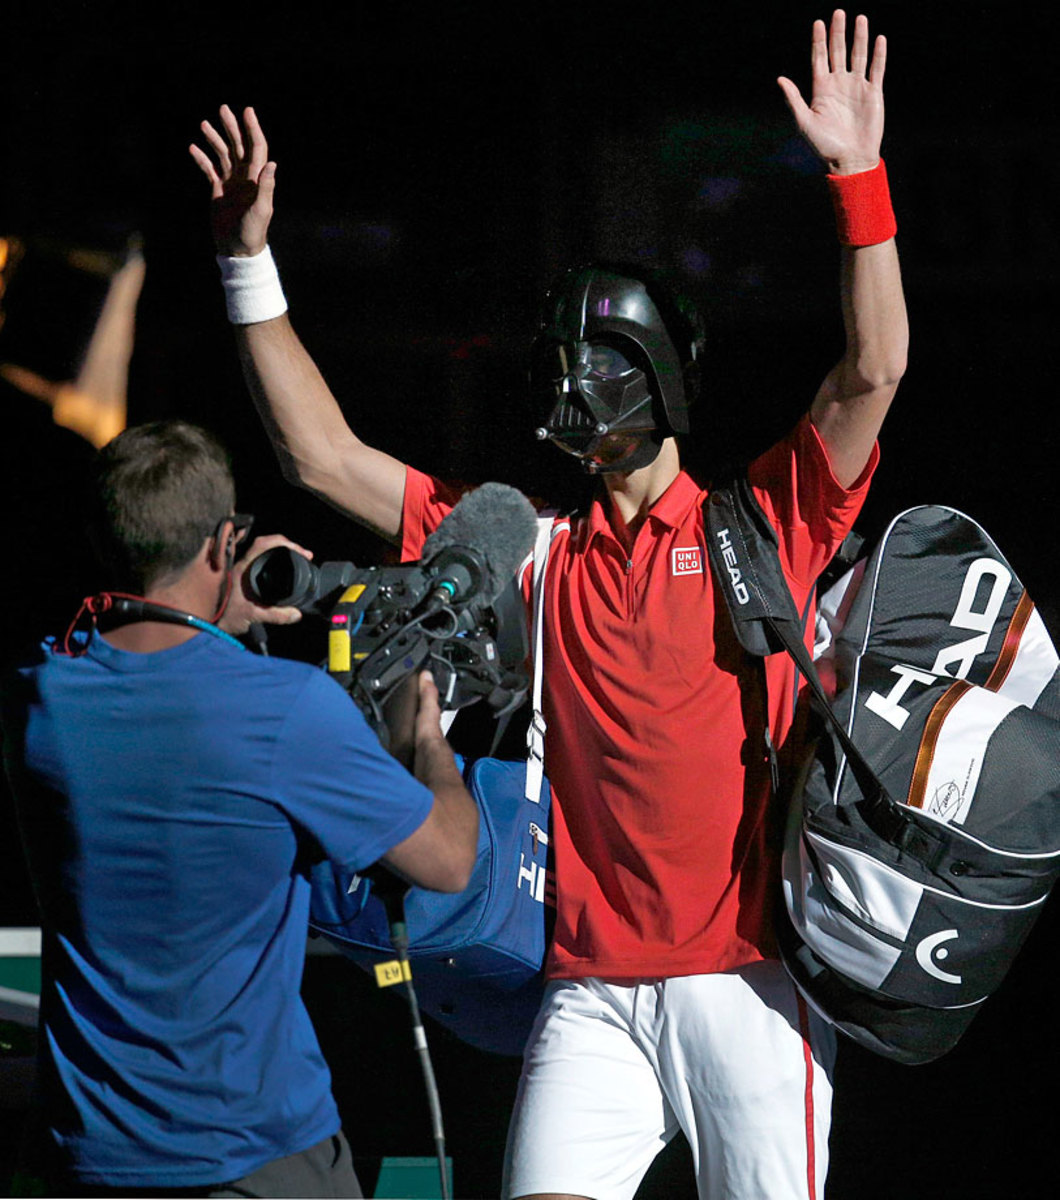 2012-1031-Novak-Djokovic-Darth-Vader-mask.jpg